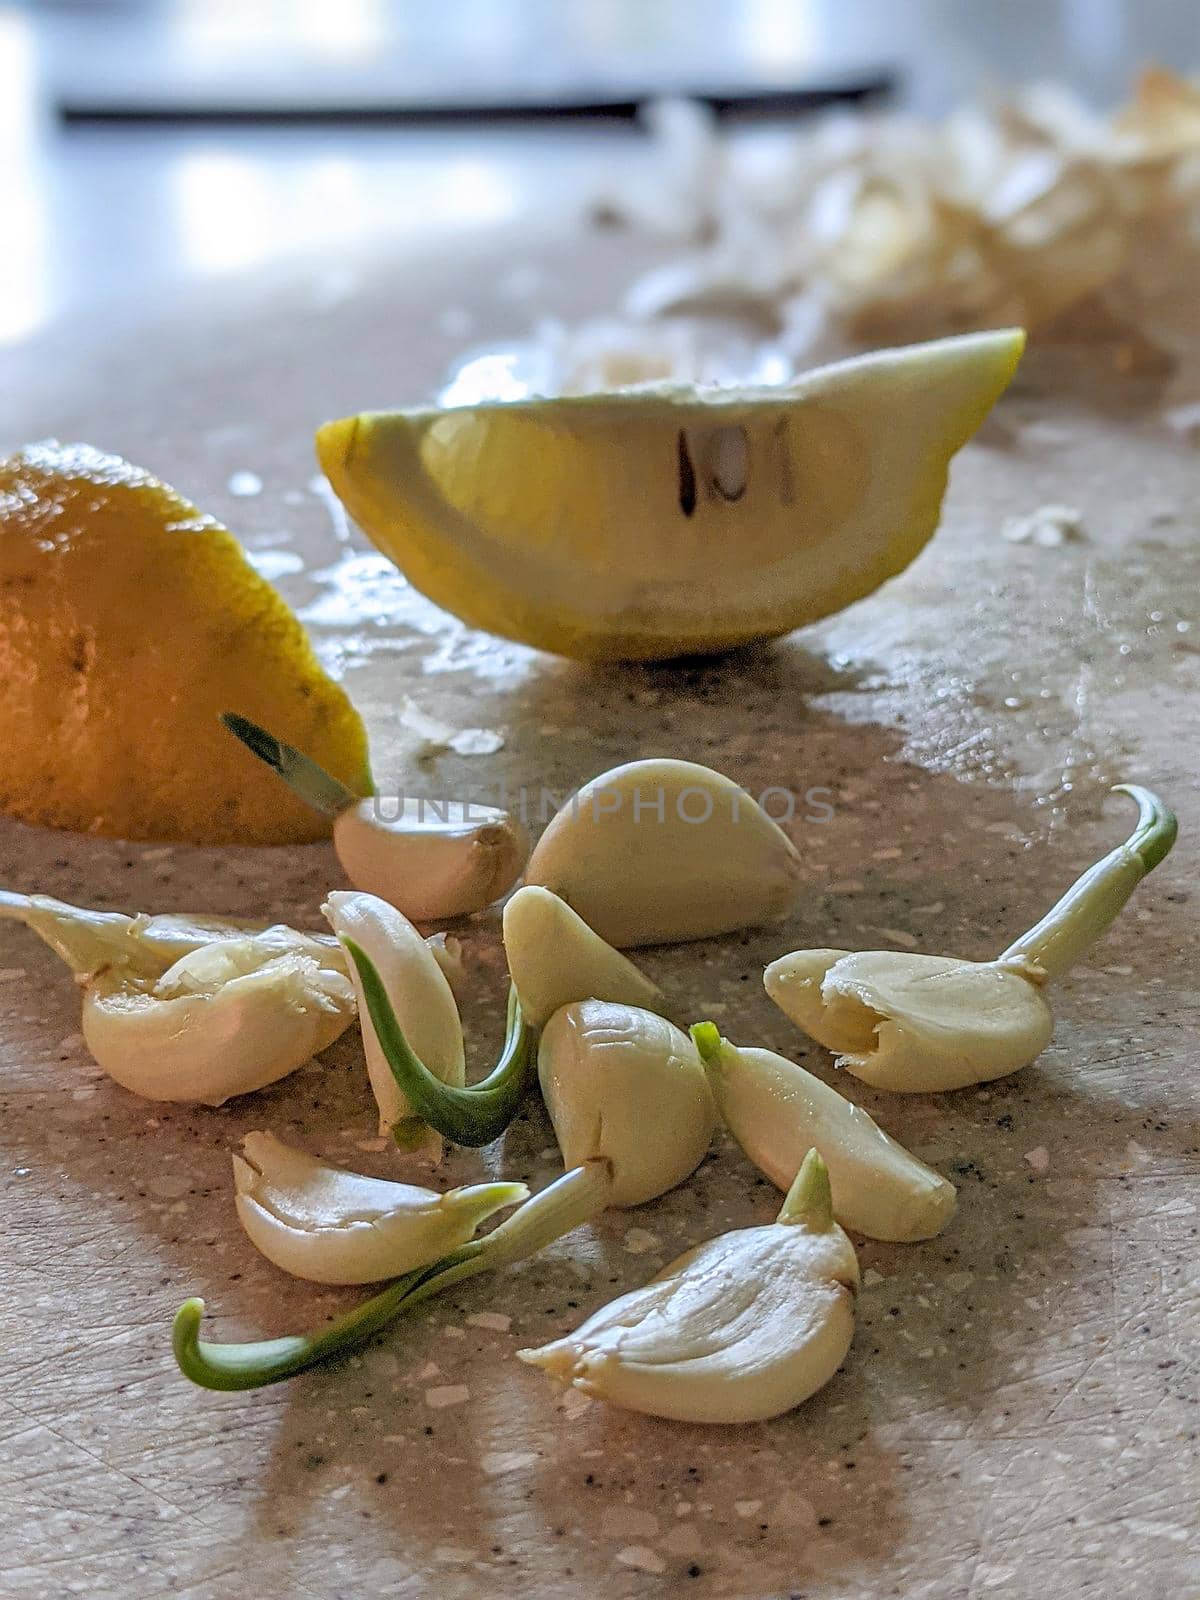 garlic and lemon lime on cutting board